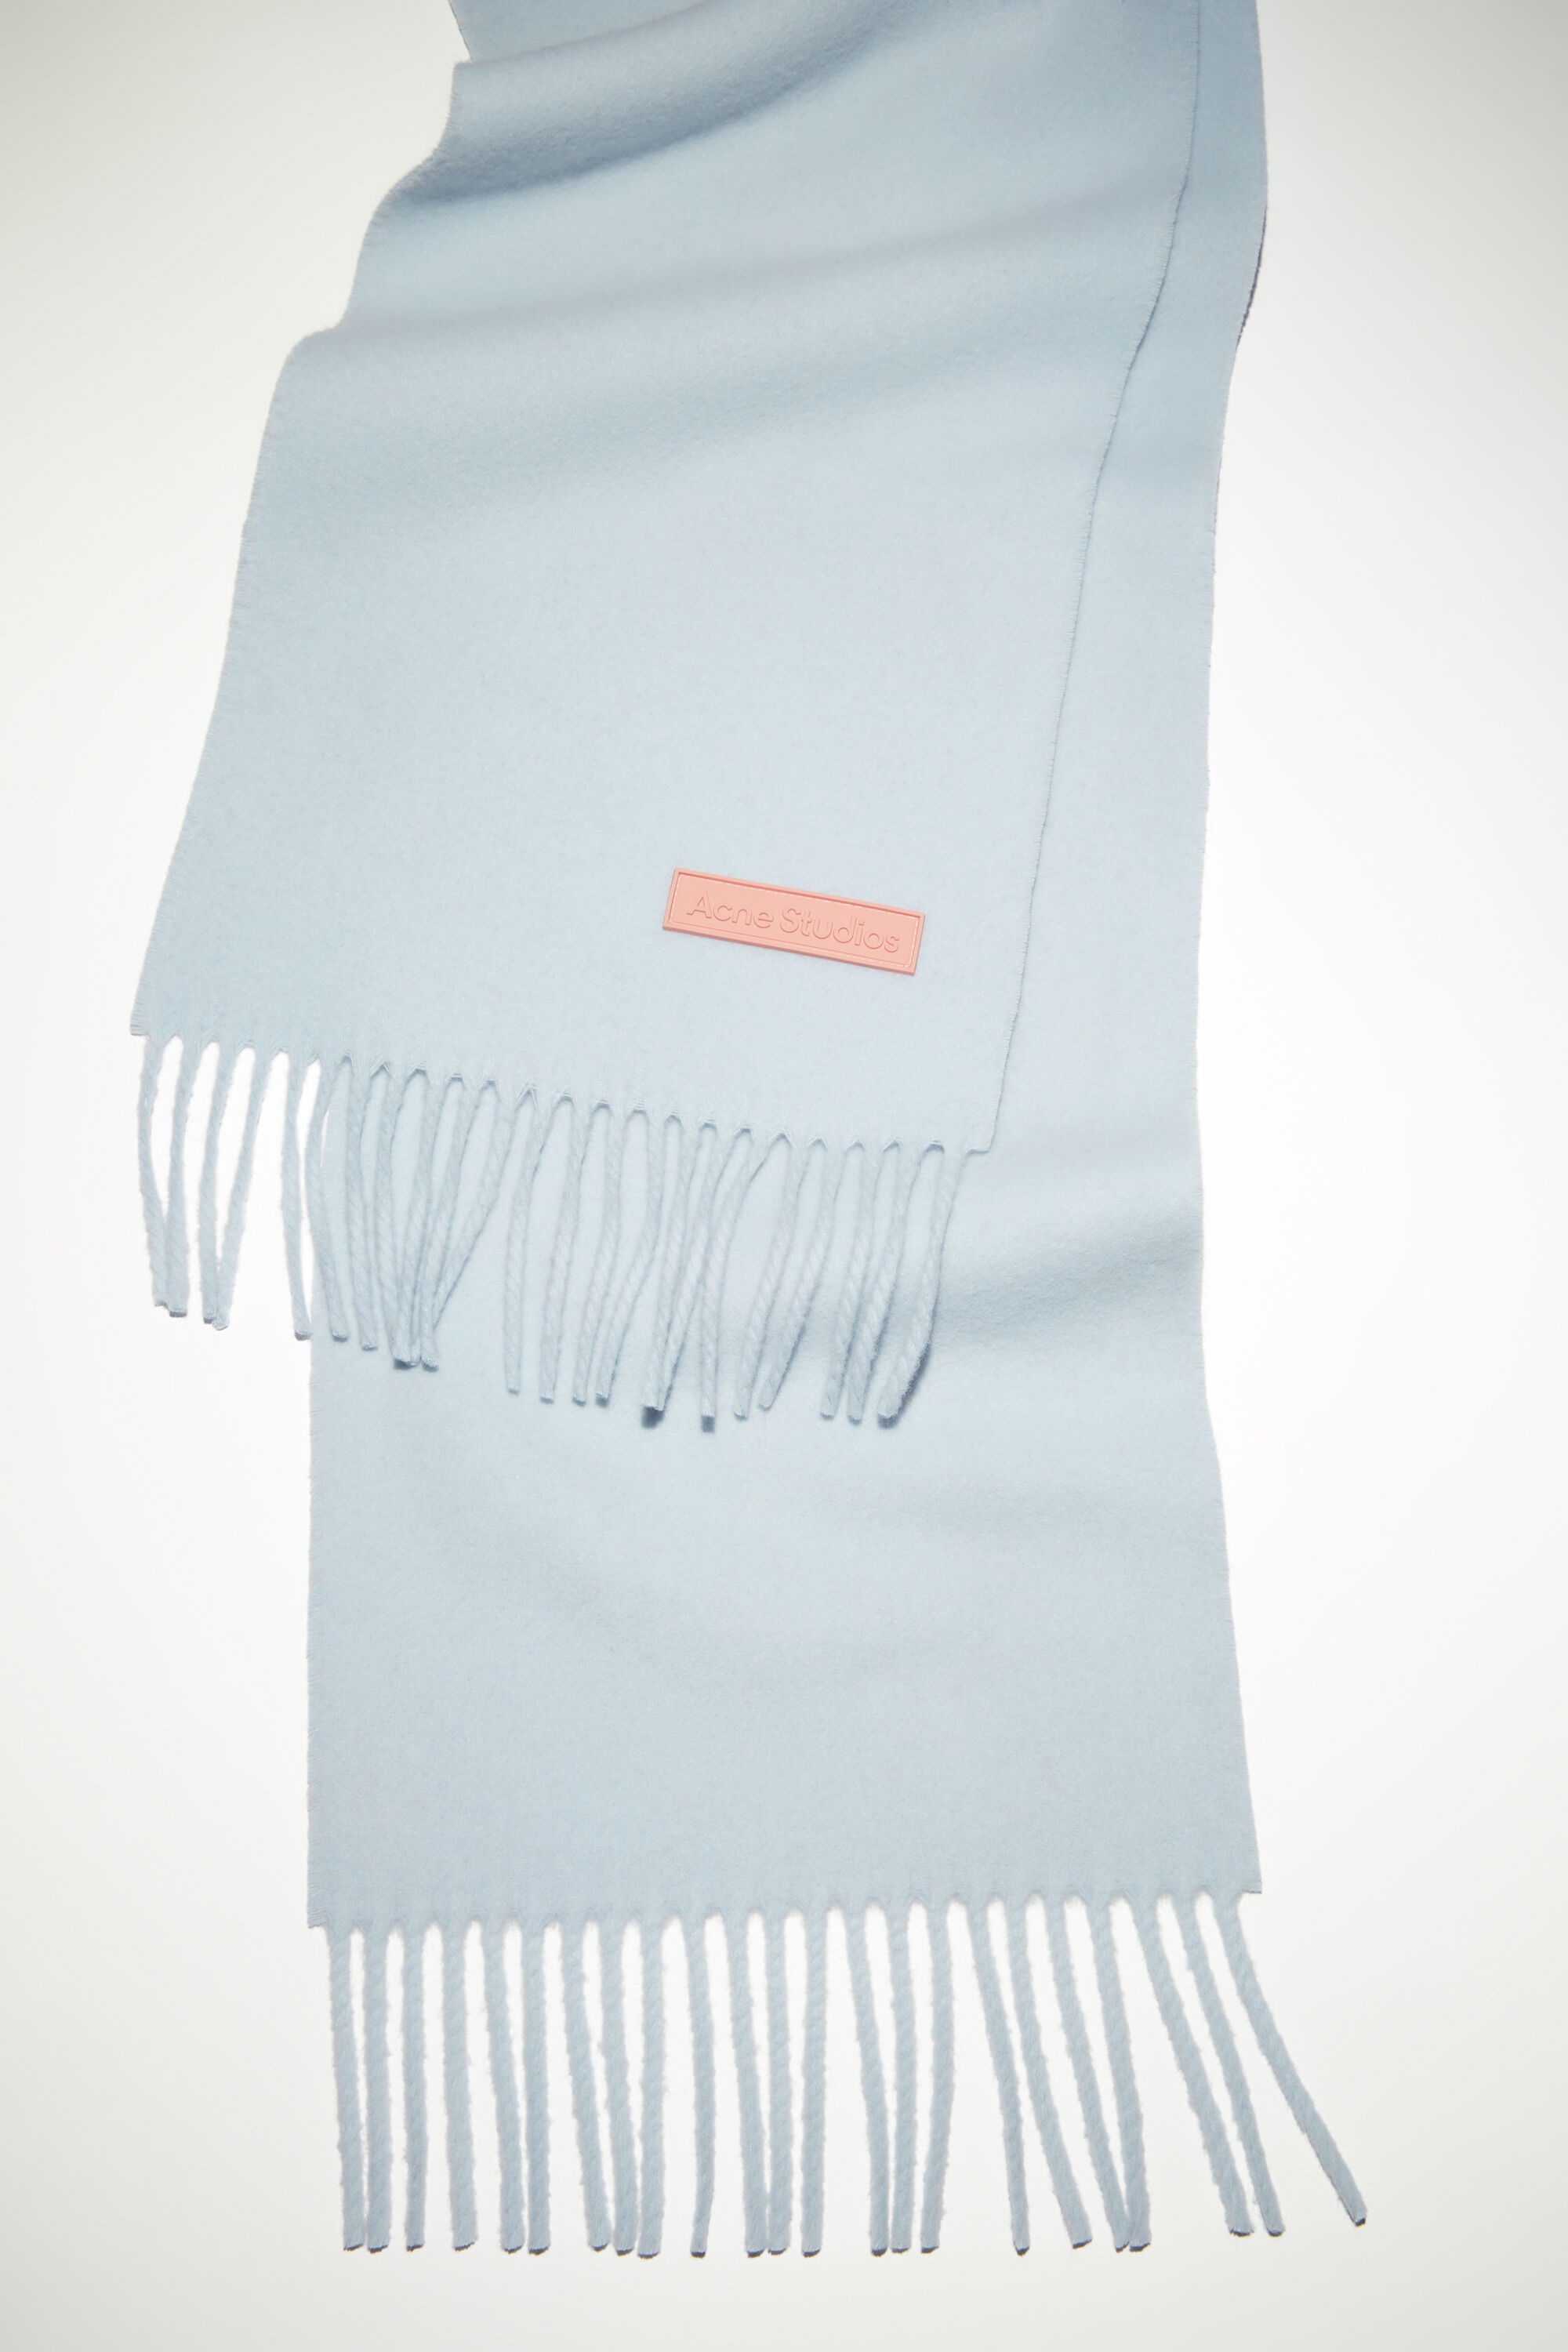 Wool scarf pink label - Narrow - Powder blue - 4